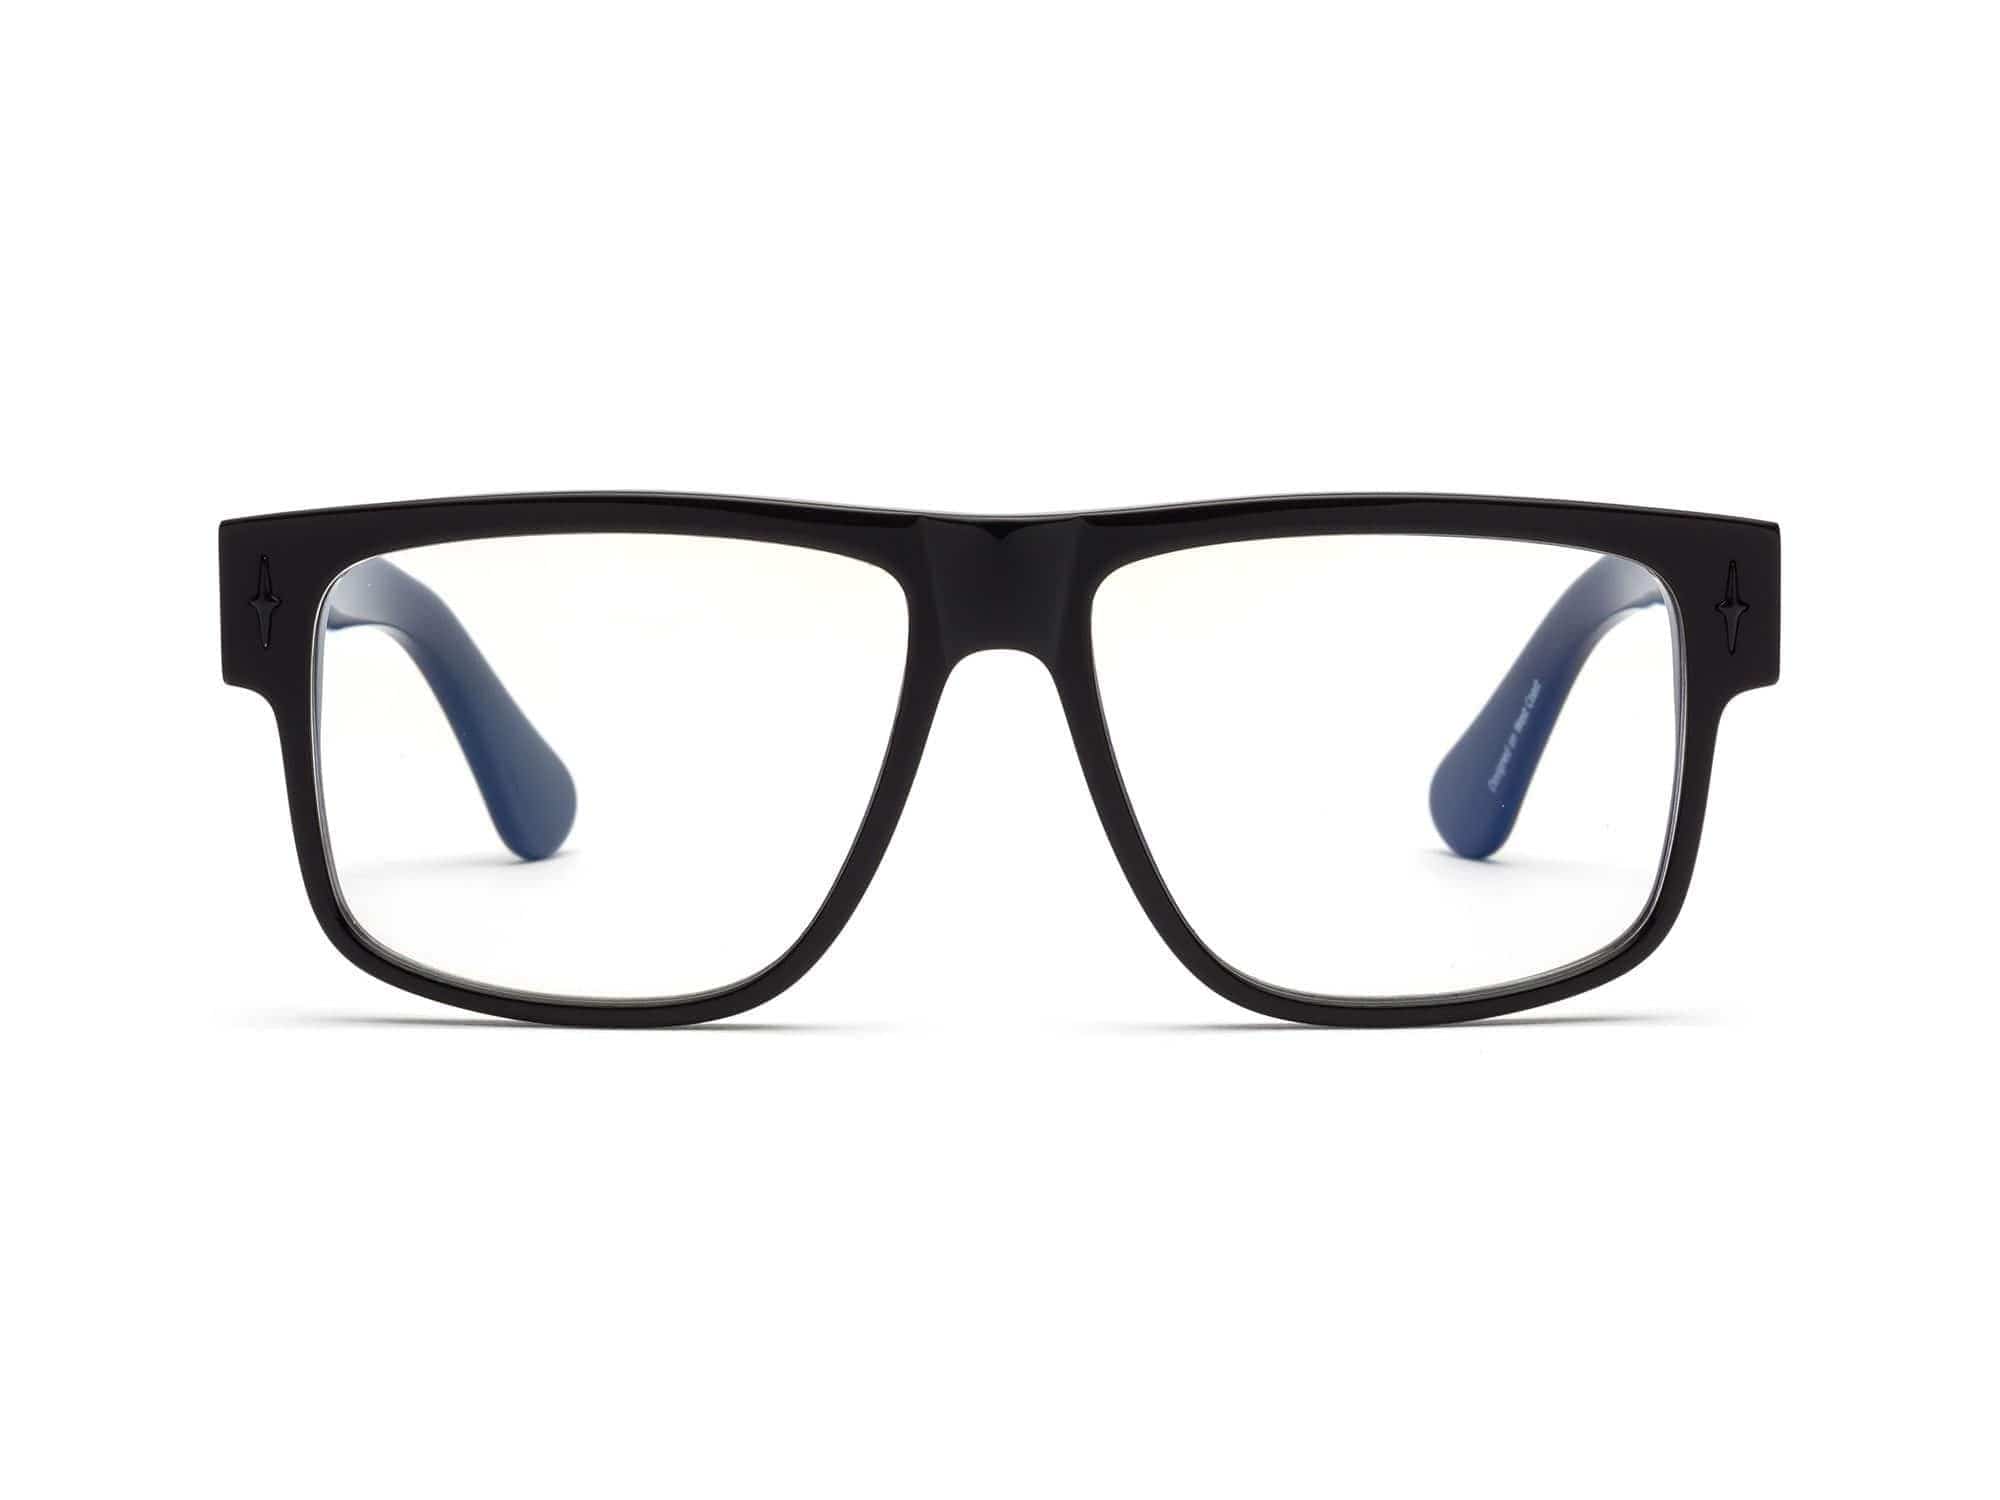 Box for Glasses Aerography Eyeglass Case Eyeglass Case